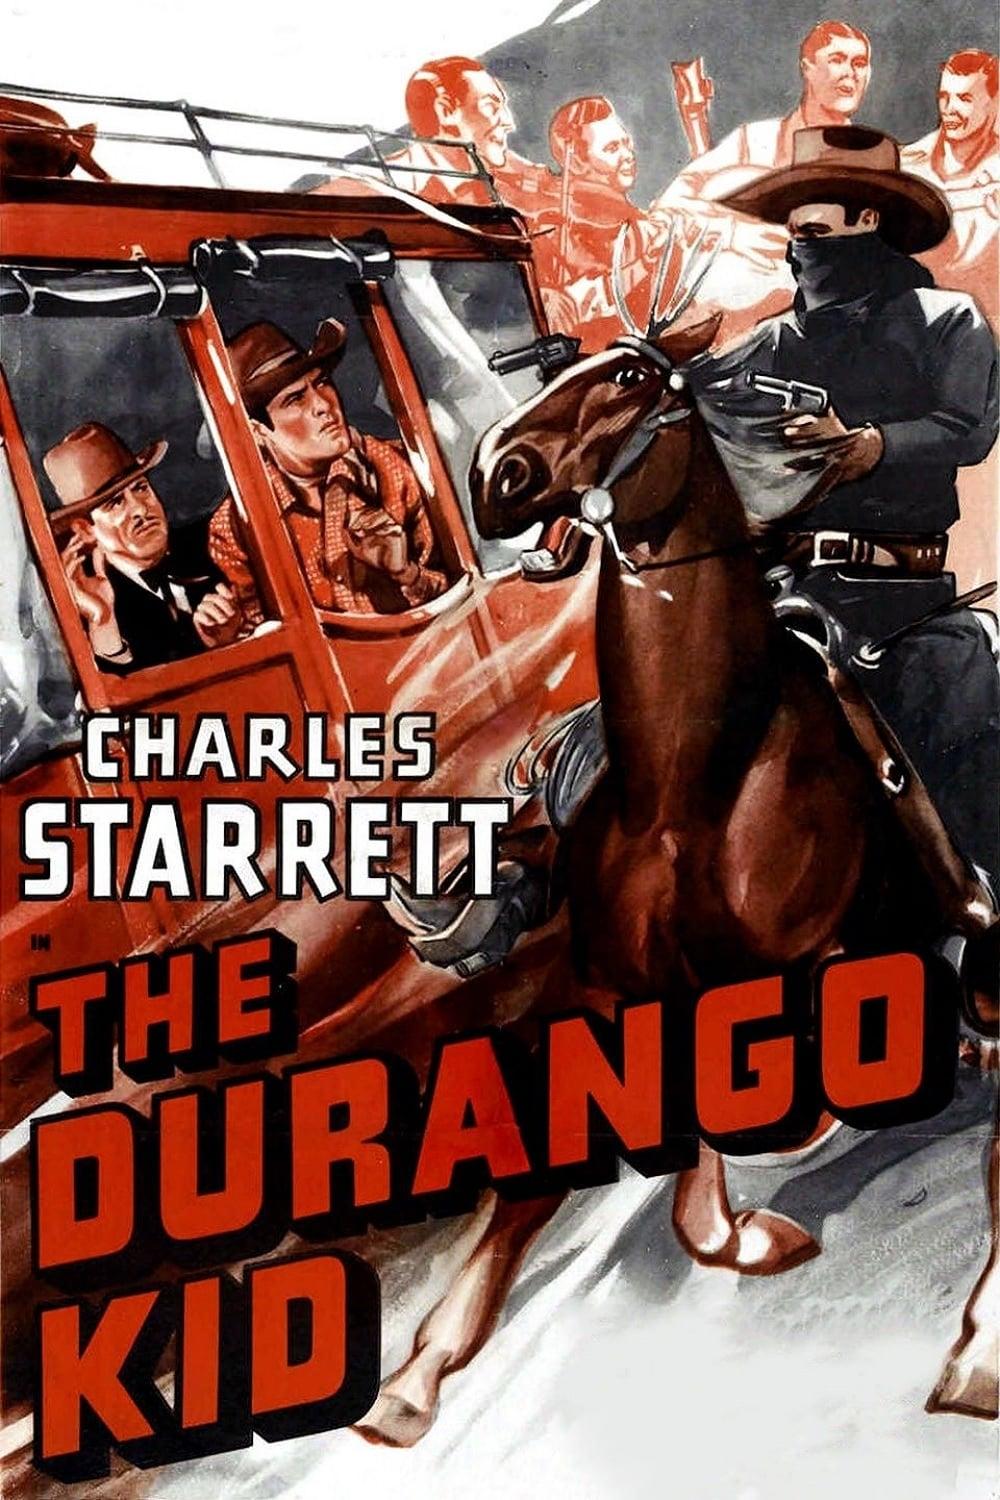 The Durango Kid poster